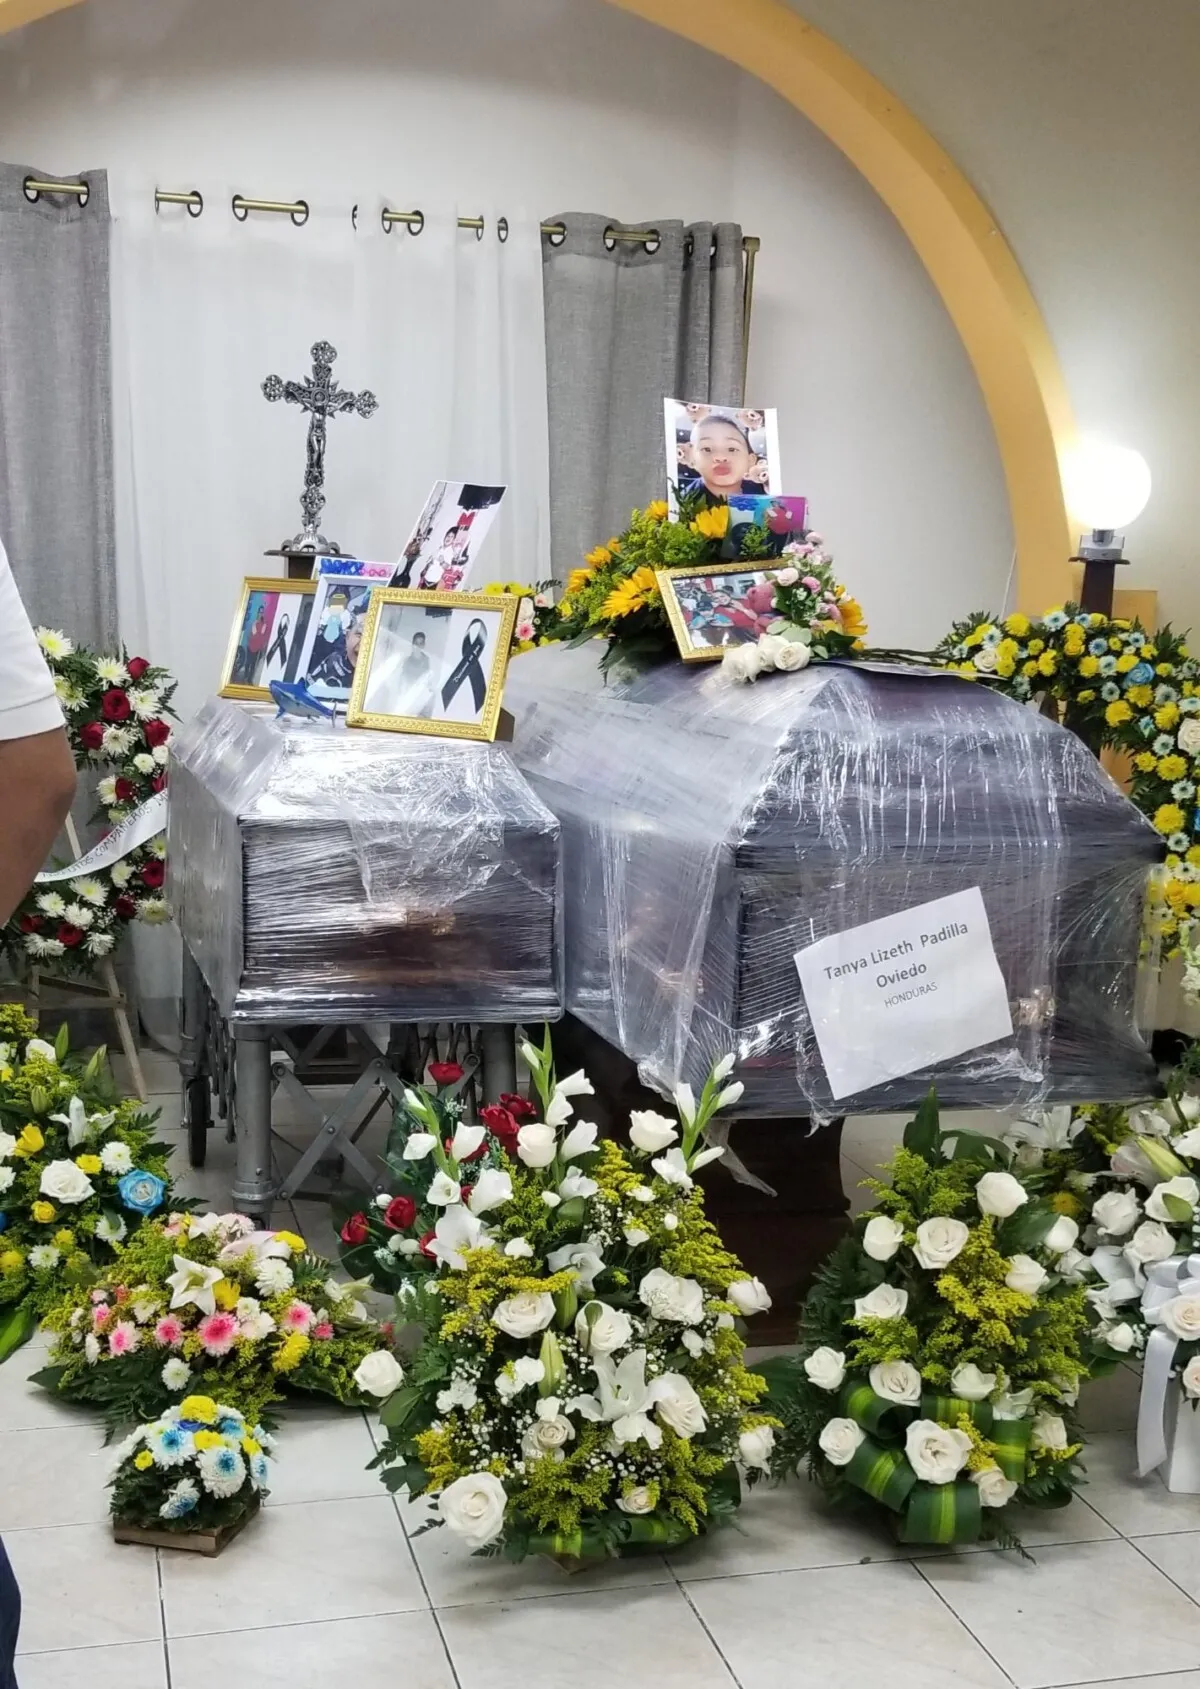 Velan cuerpos de madre e hijo que murieron en naufragio en Veracruz, México